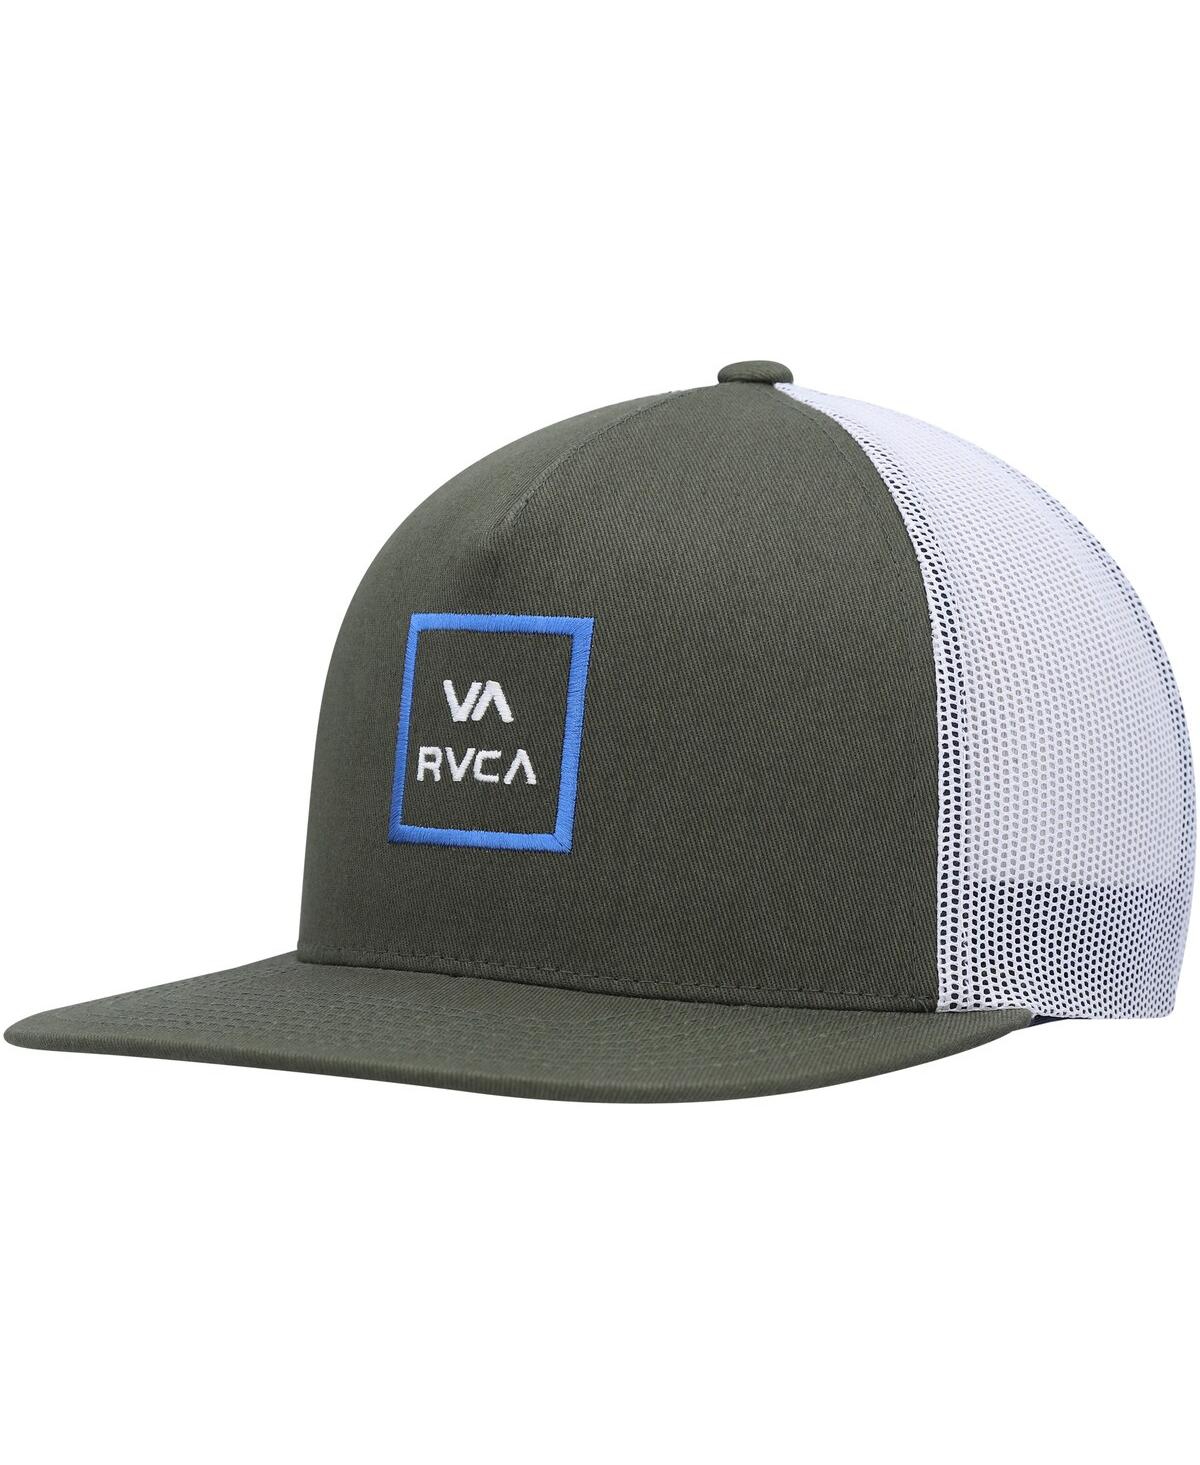 Rvca Men's  Olive Va All The Way Trucker Snapback Hat